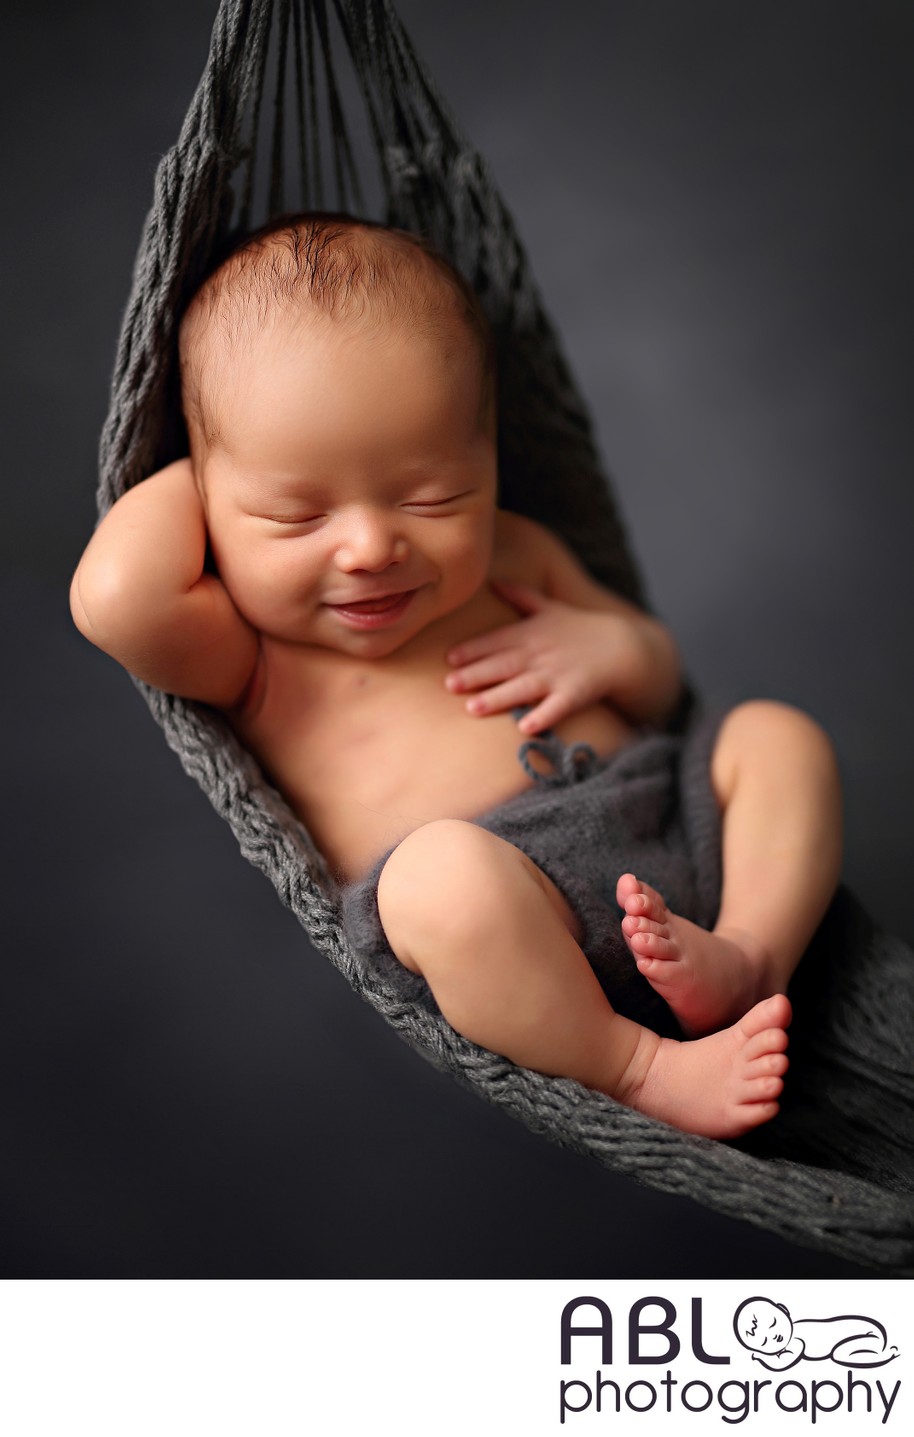 Baby boy smiling in a gray hammock